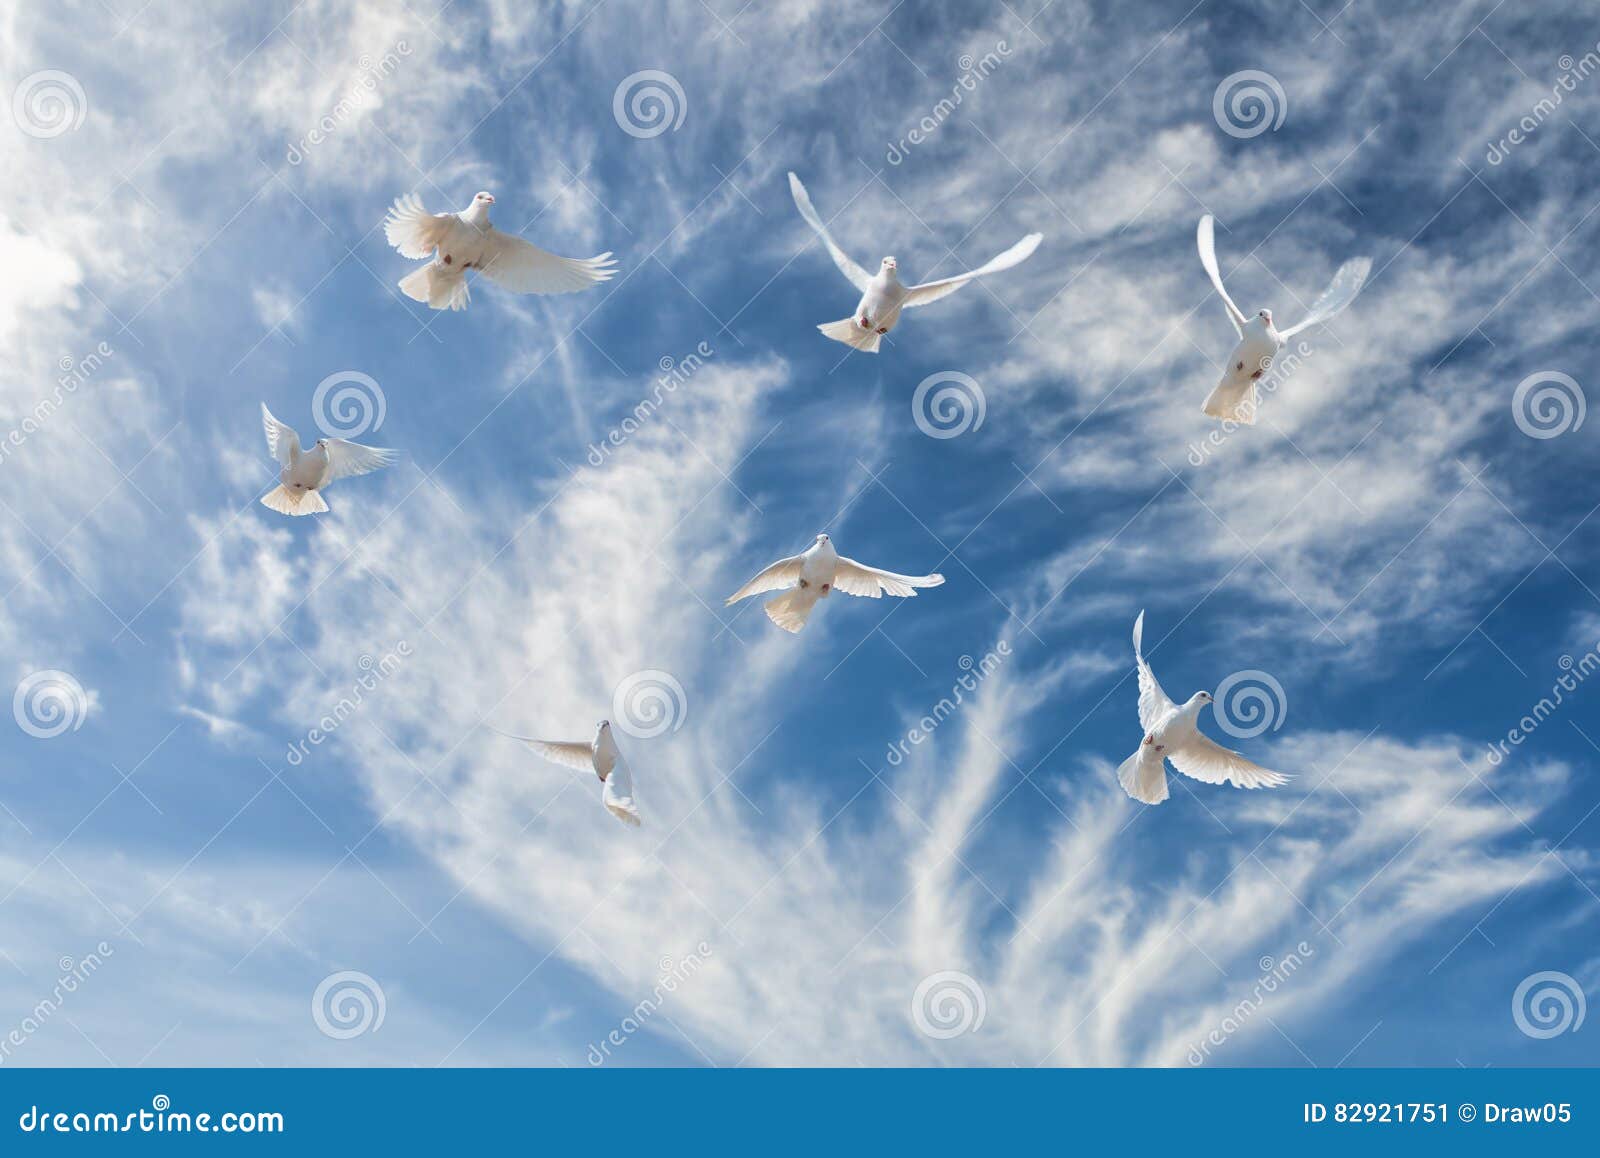 Птицы белые летели и кричали текст. Голуби в небе. Белые голуби в небе. Голуби улетели. Стая голубей в небе.